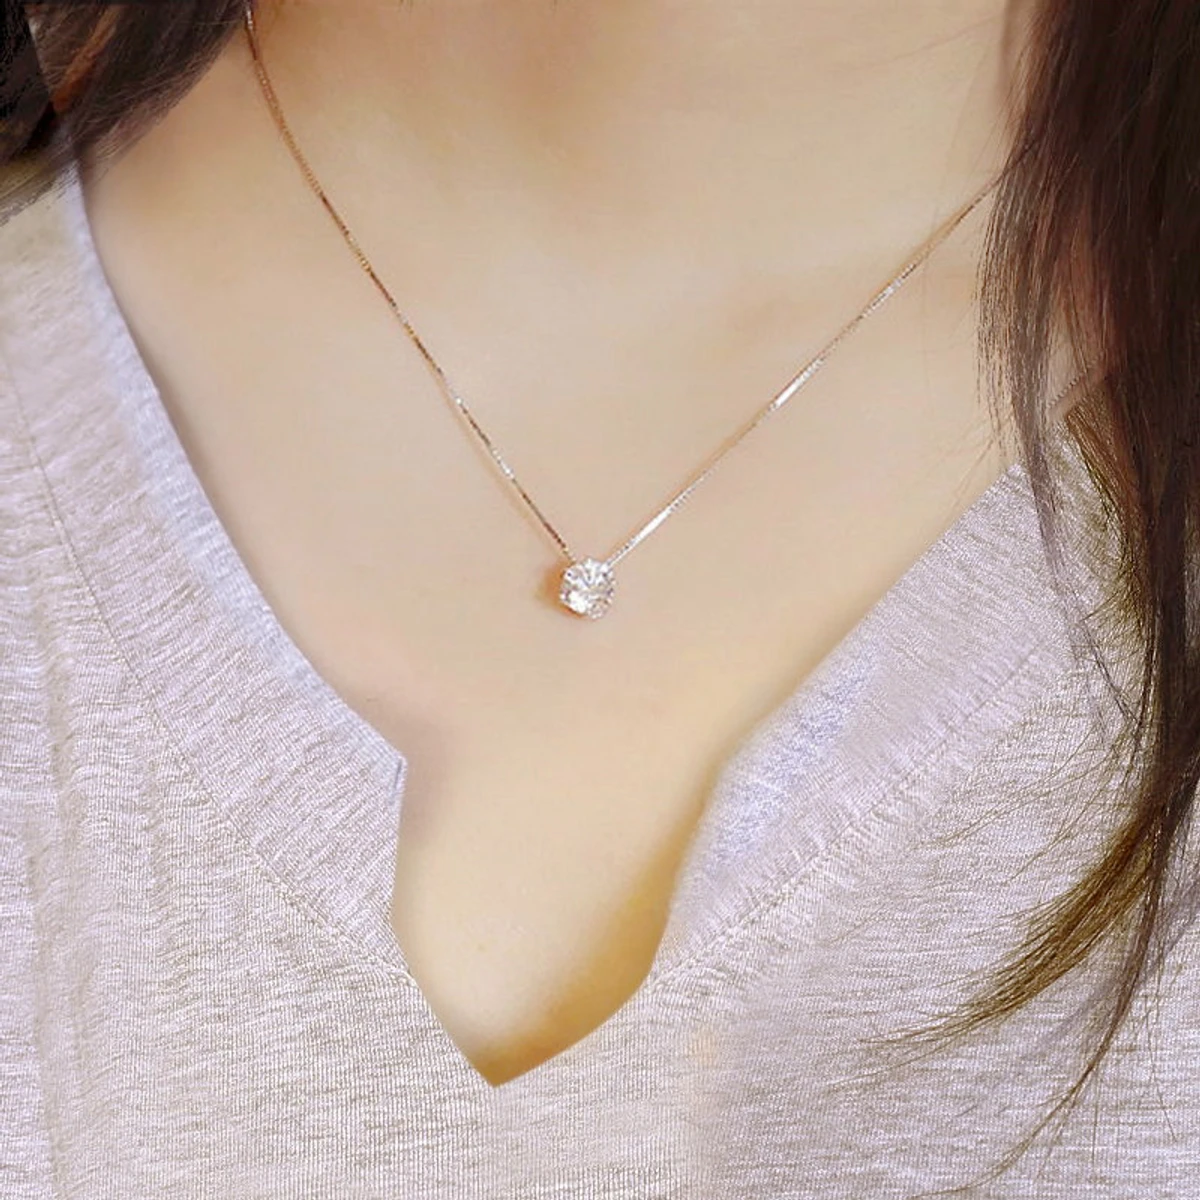 Minimalist Choker Neck Chains Fashion Delicate Jewelry Gift For Women